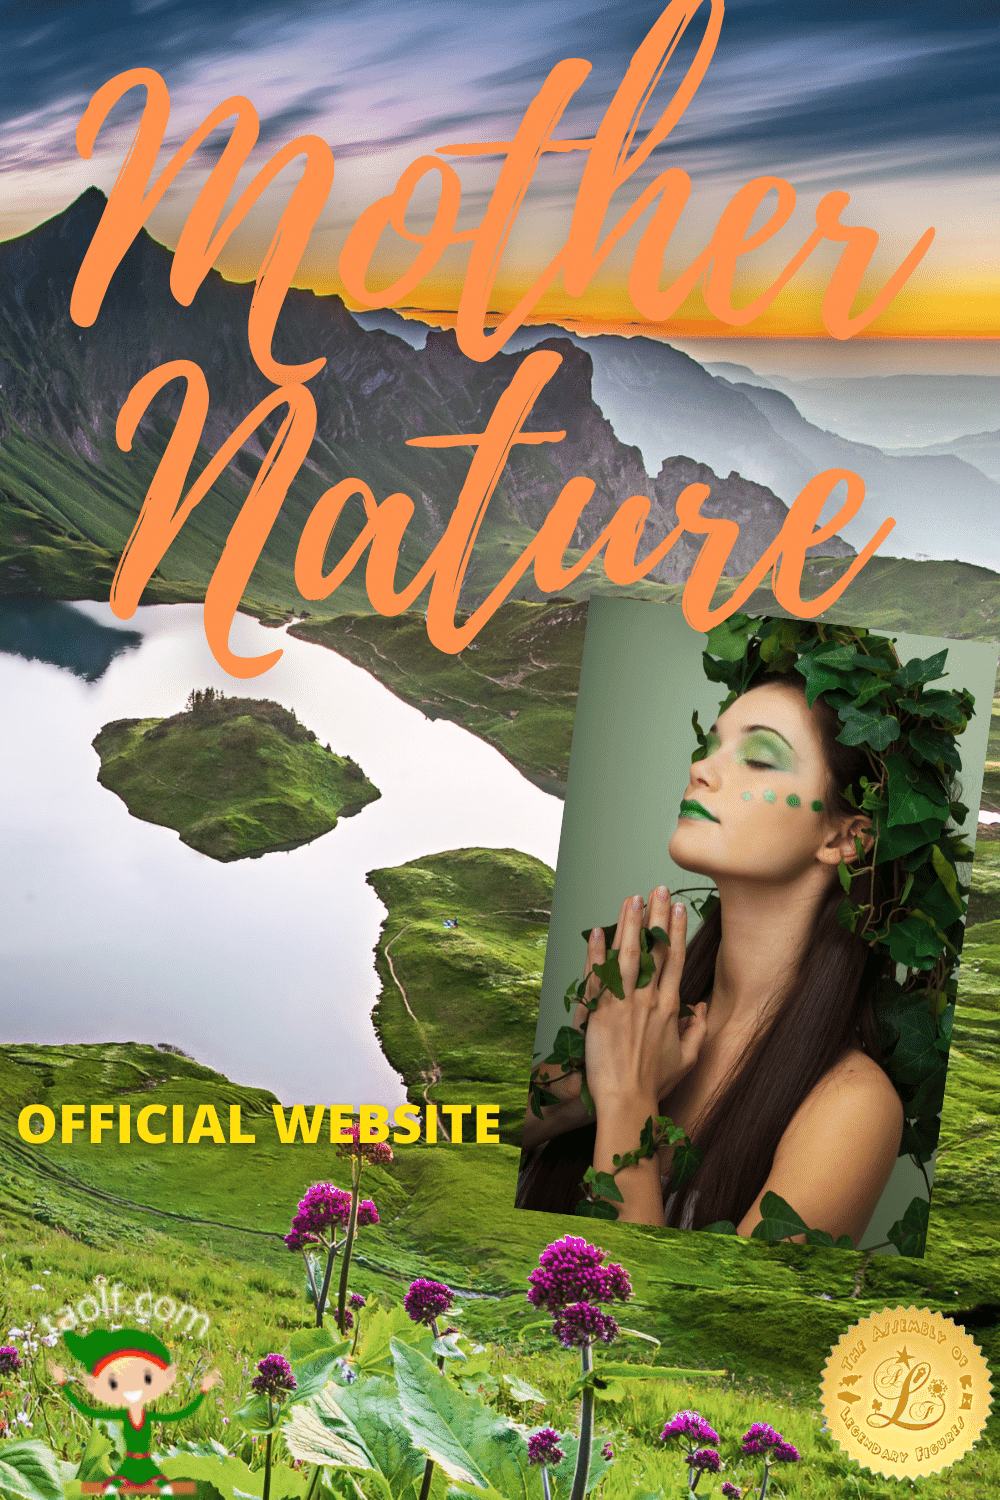 Mother Nature - Nurturing everything around us